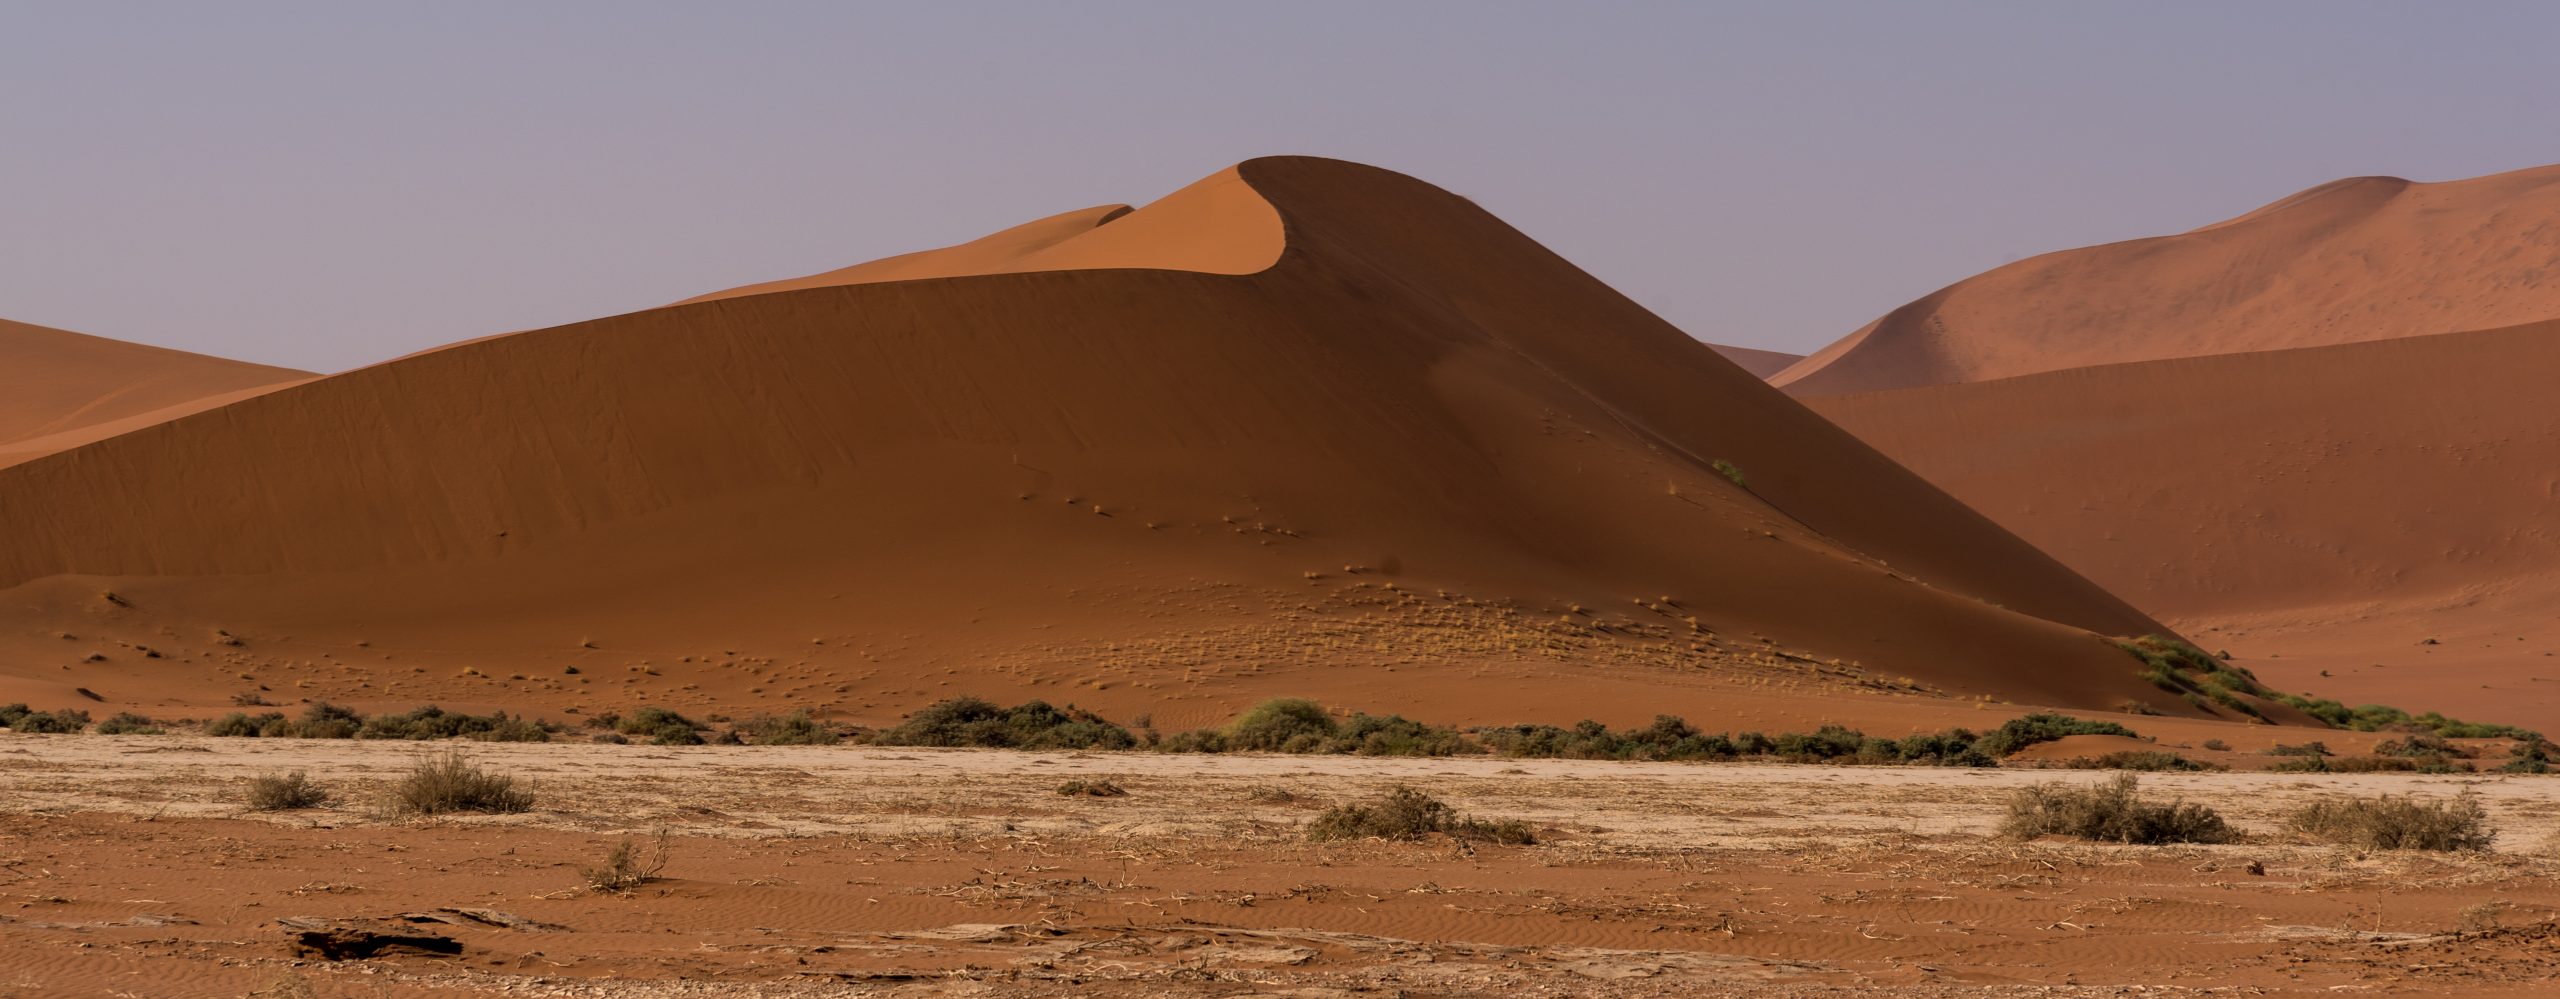 The dunes around Sossusvlei